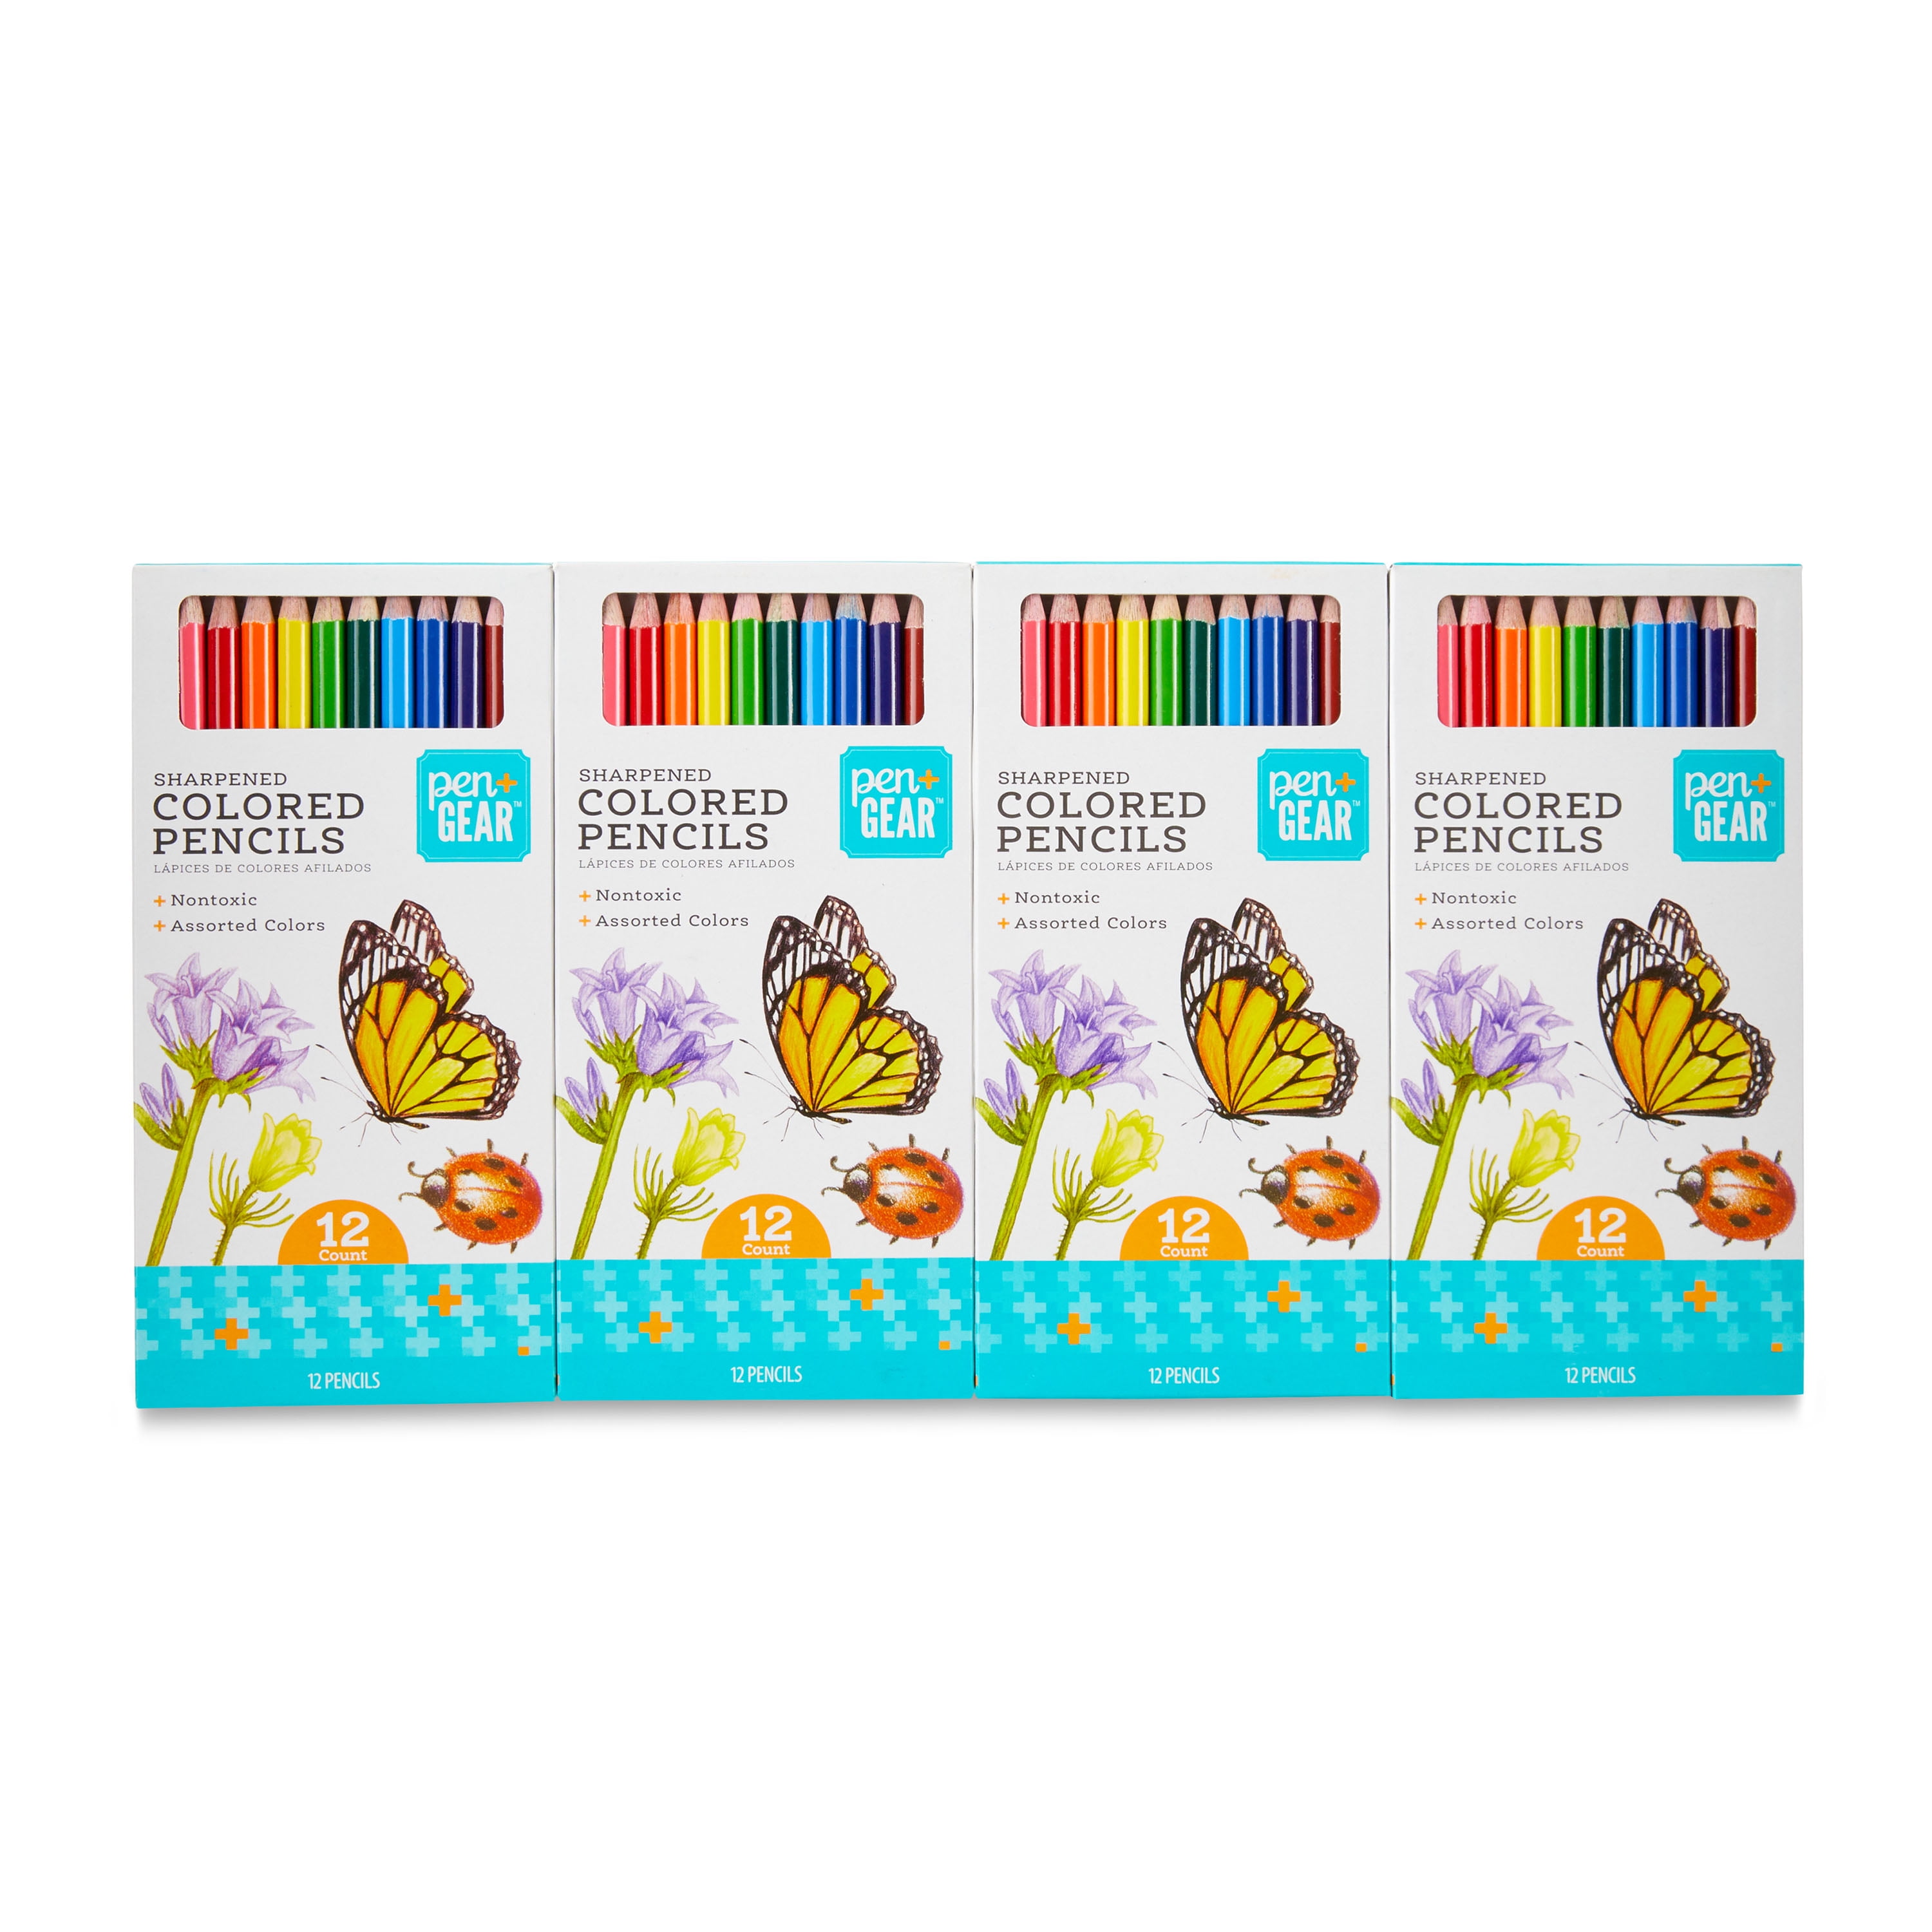 2 Boxes Pen+Gear Sharpened Colored Pencils 12 Count Multicolor Nontoxic